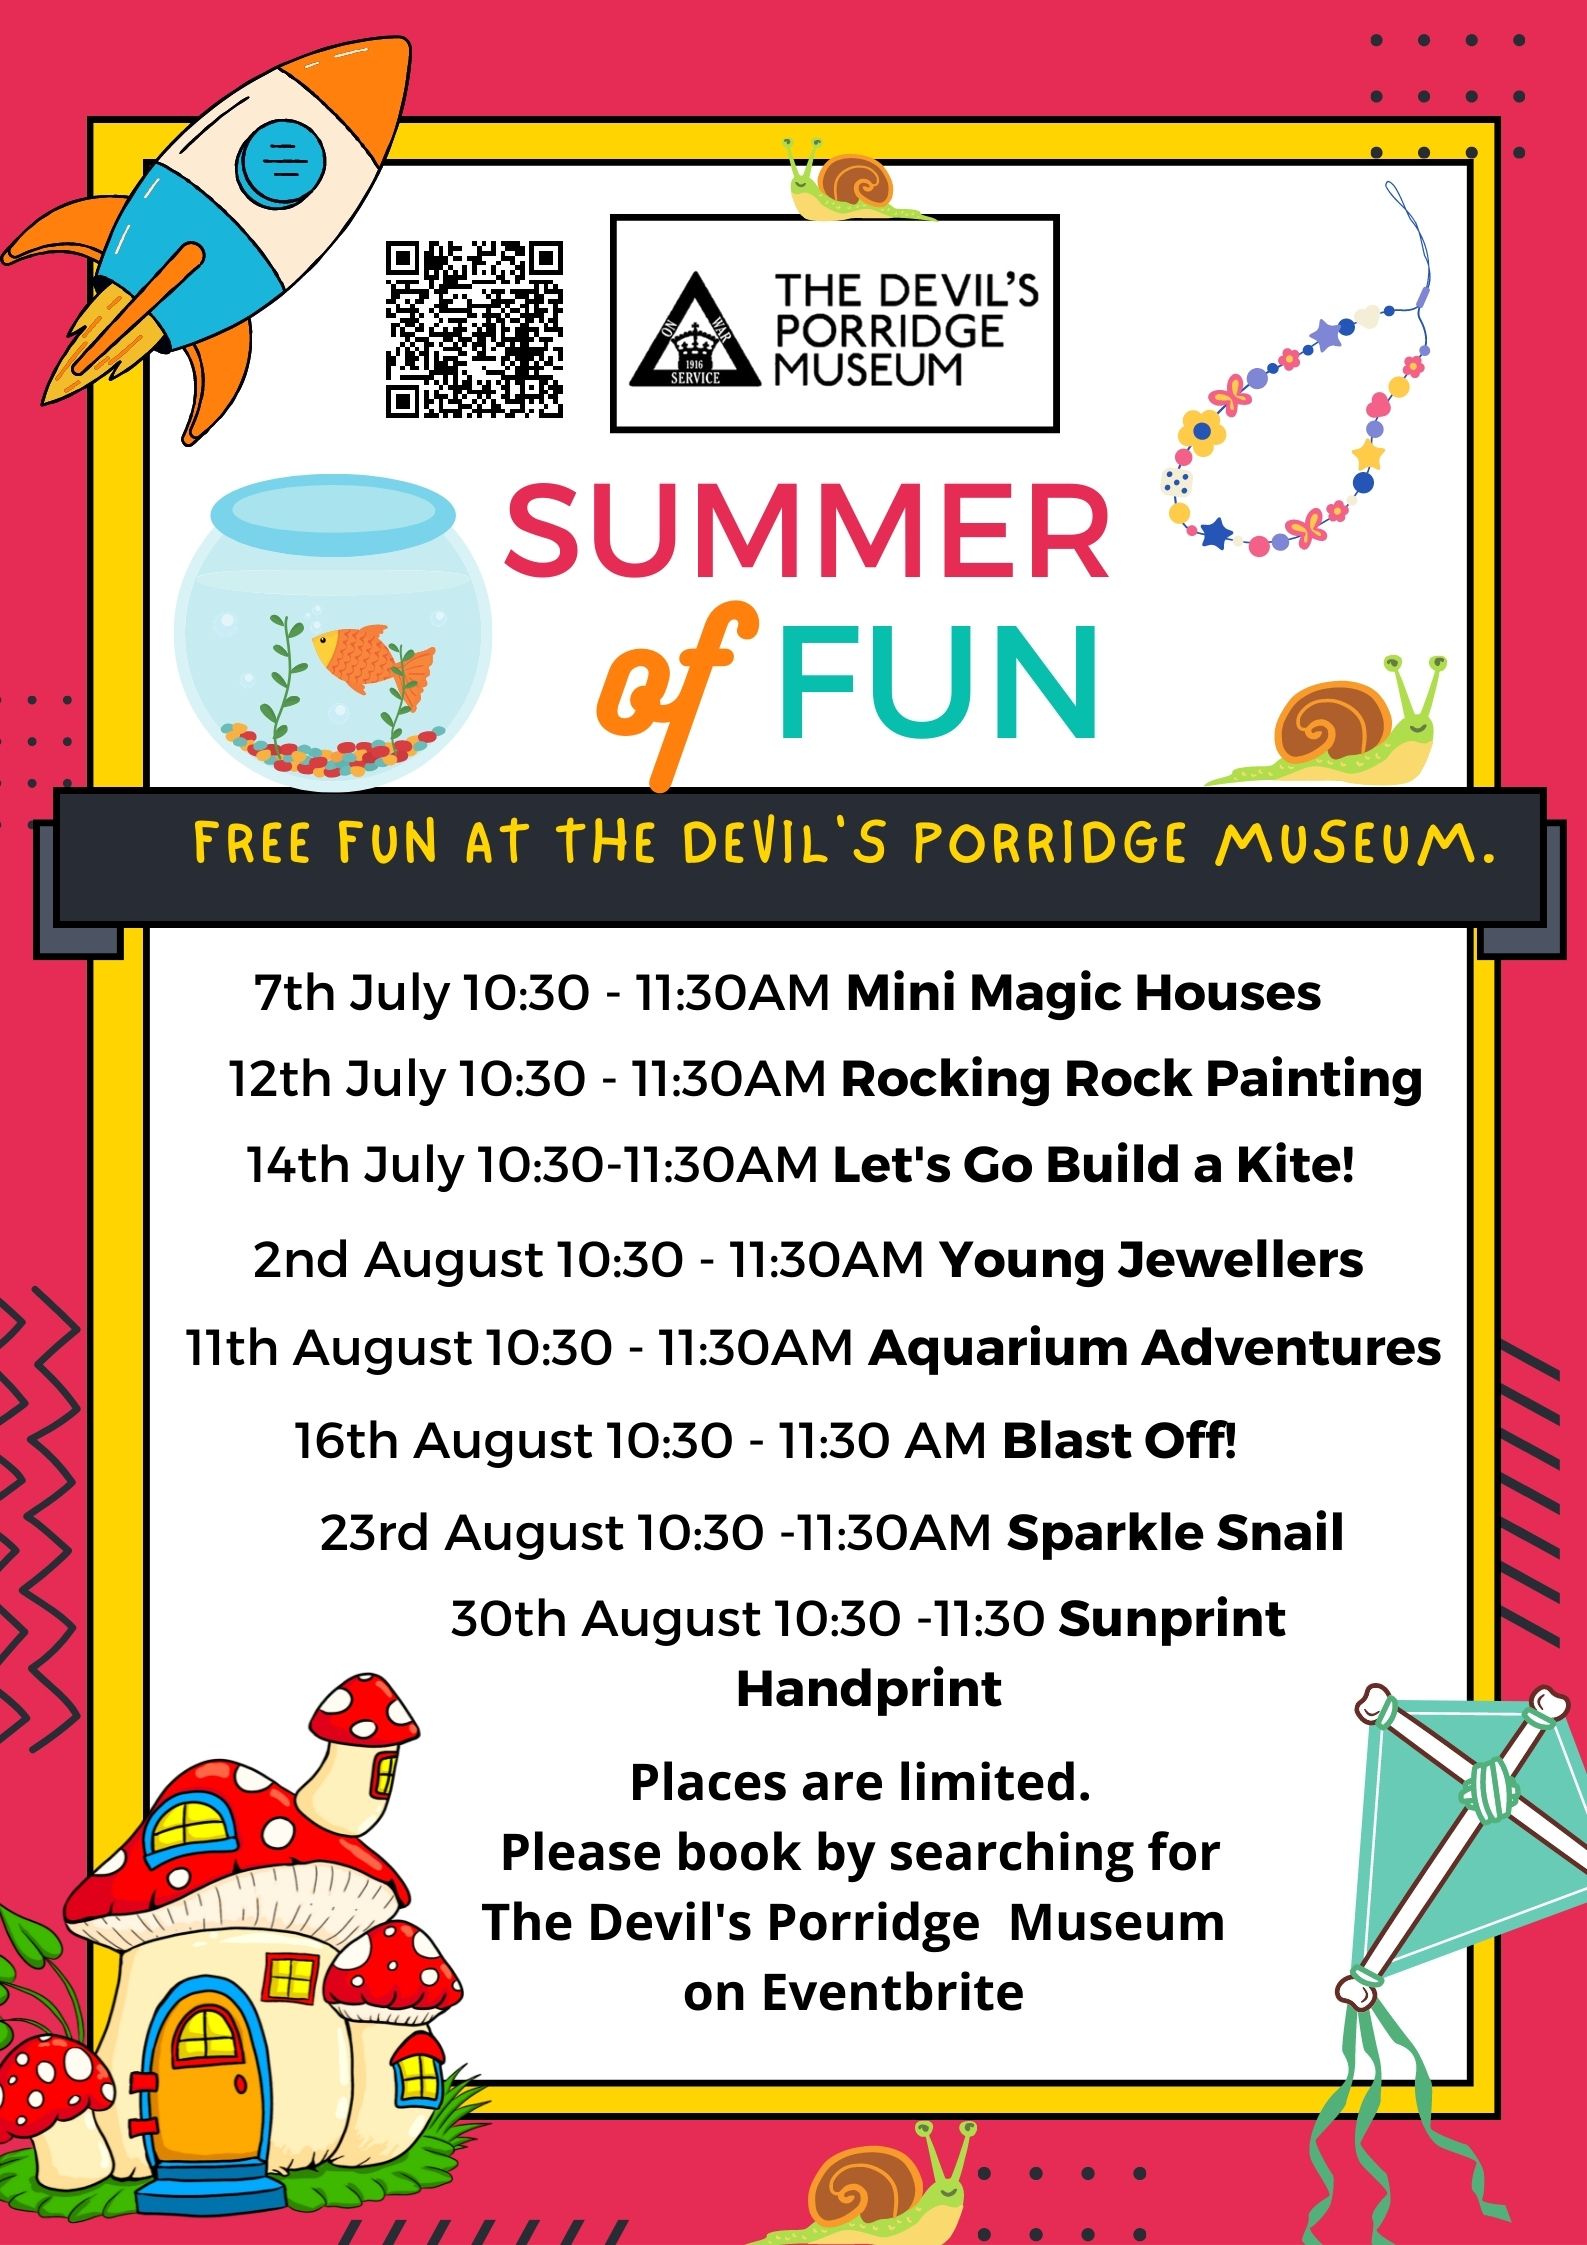 Summer of Fun programme at The Devil's Porridge Museum in 2022.